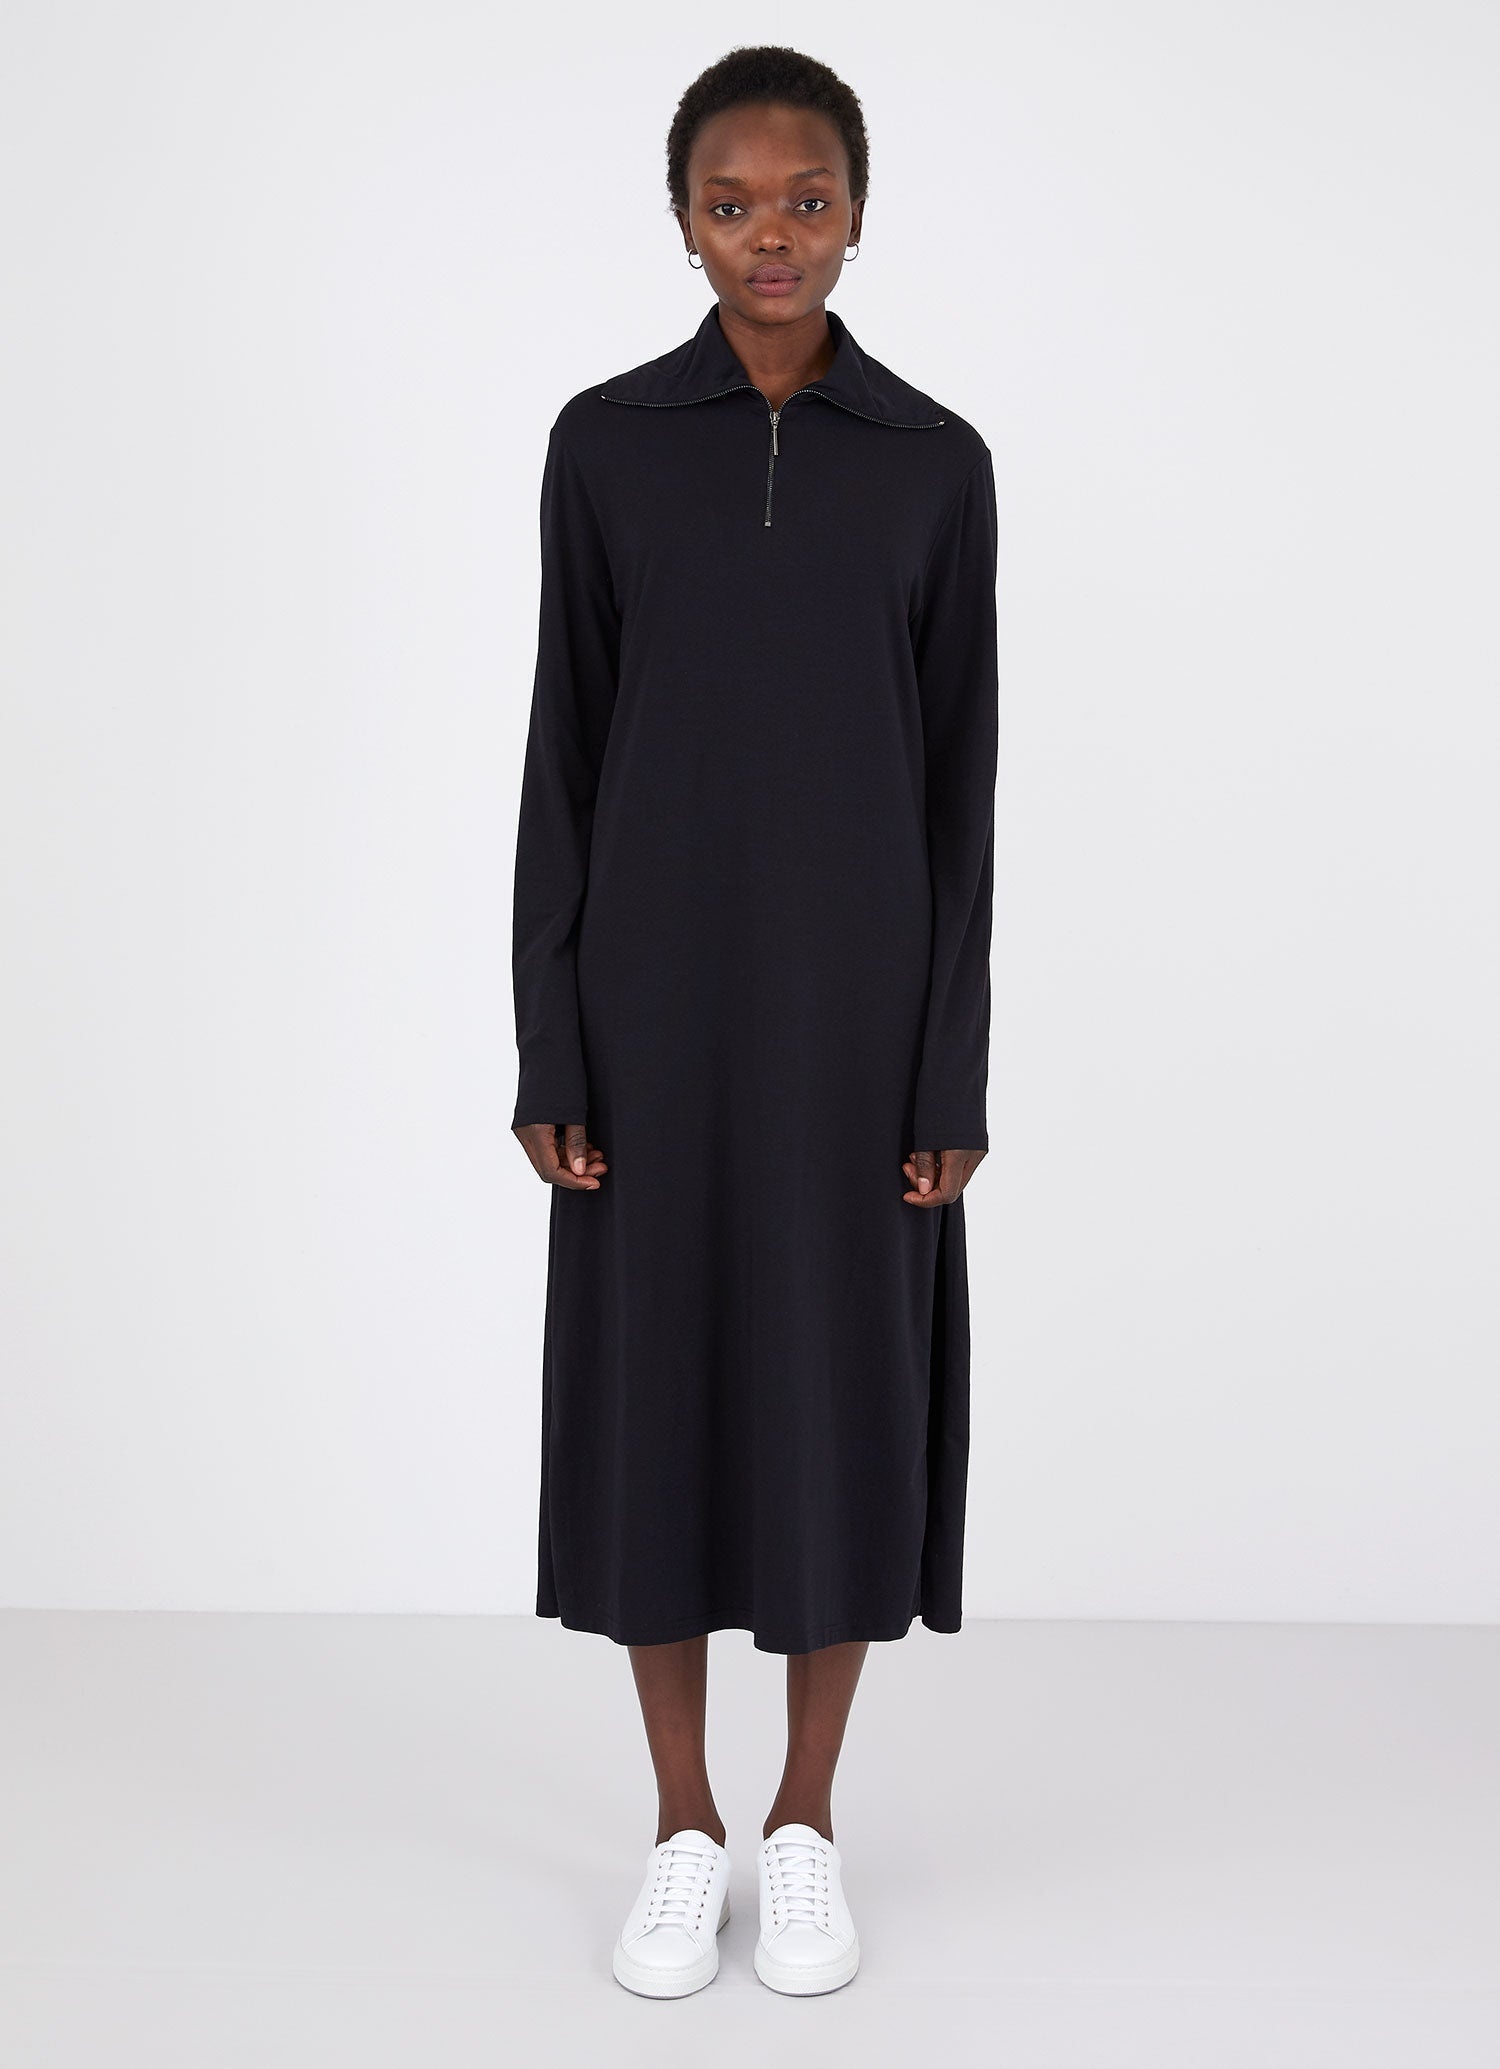 Sunspel x Studio Nicholson Jersey Dress - 1